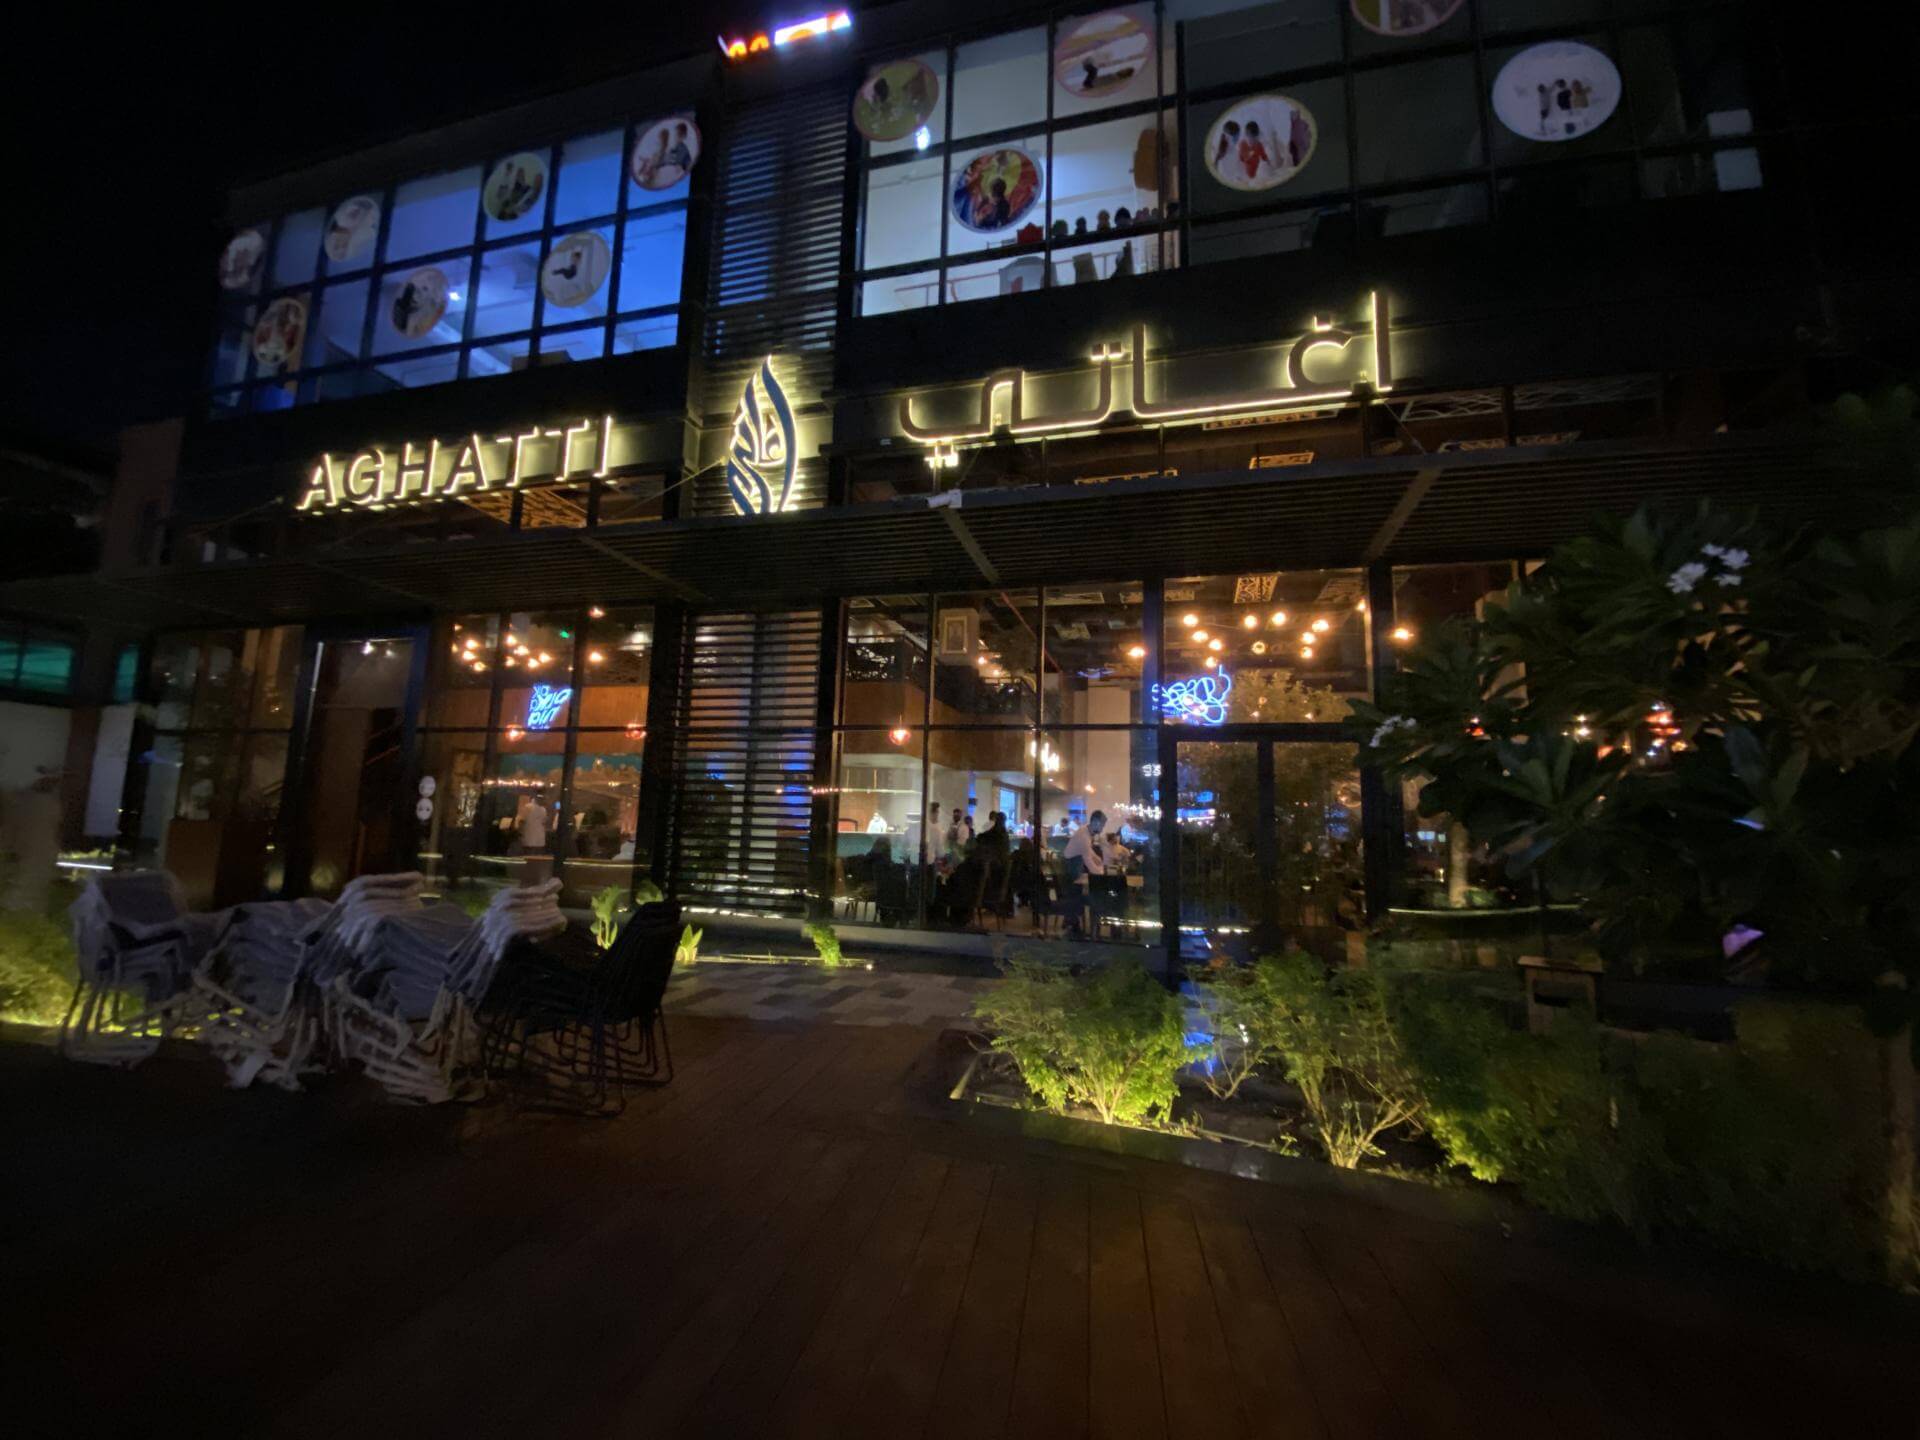 Aghatti Restaurant